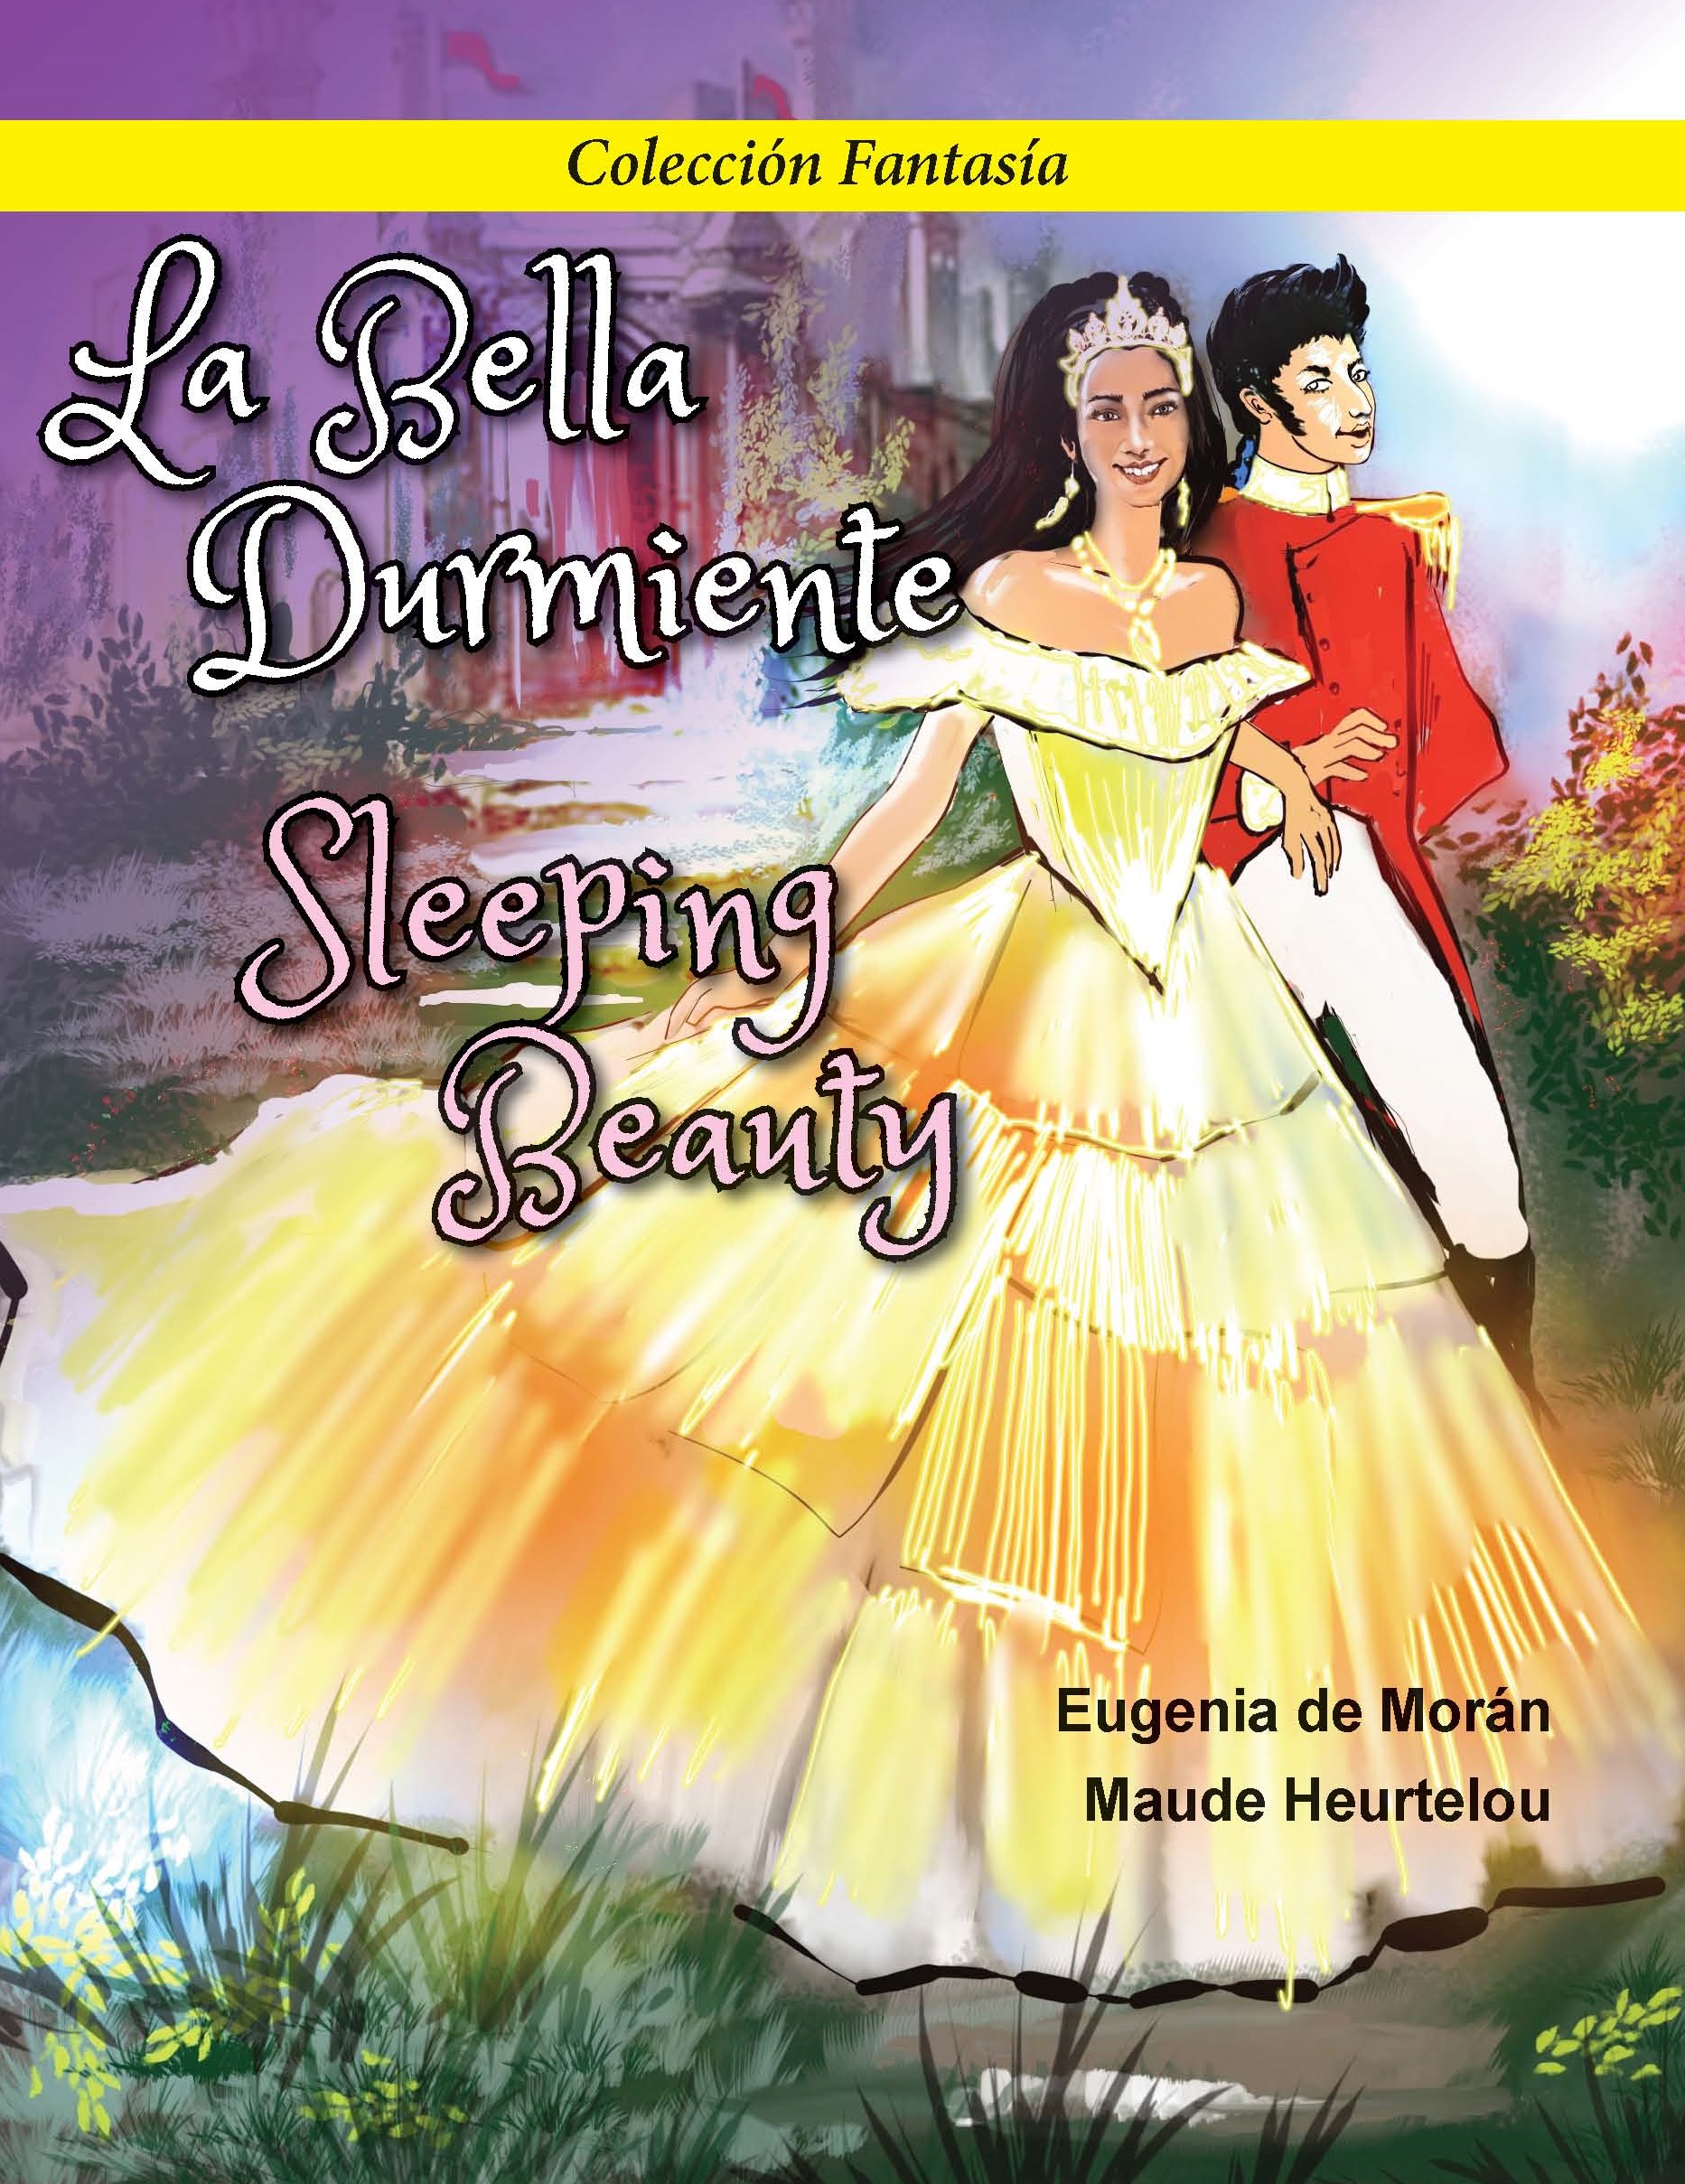 La Bella Durmiente /
Sleeping Beauty